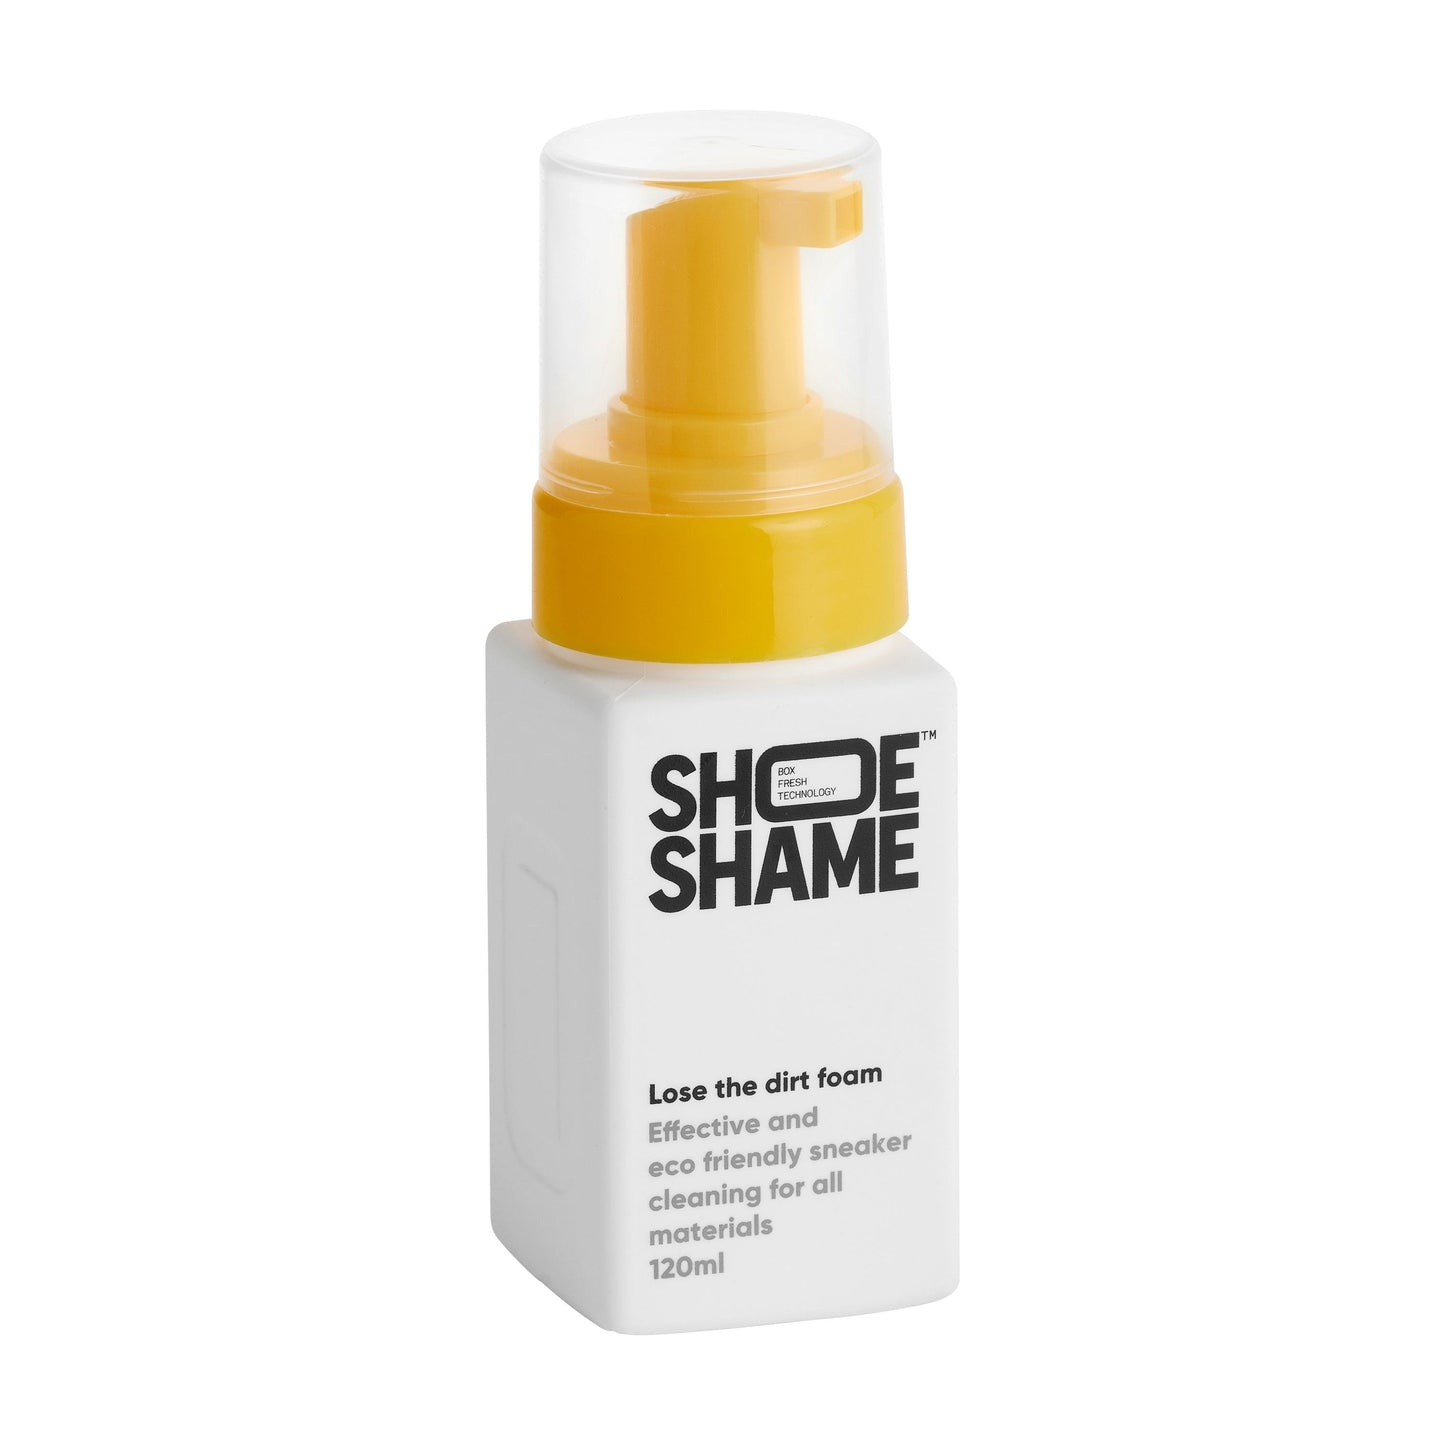 Shoe Shame - Lose the dirt foam